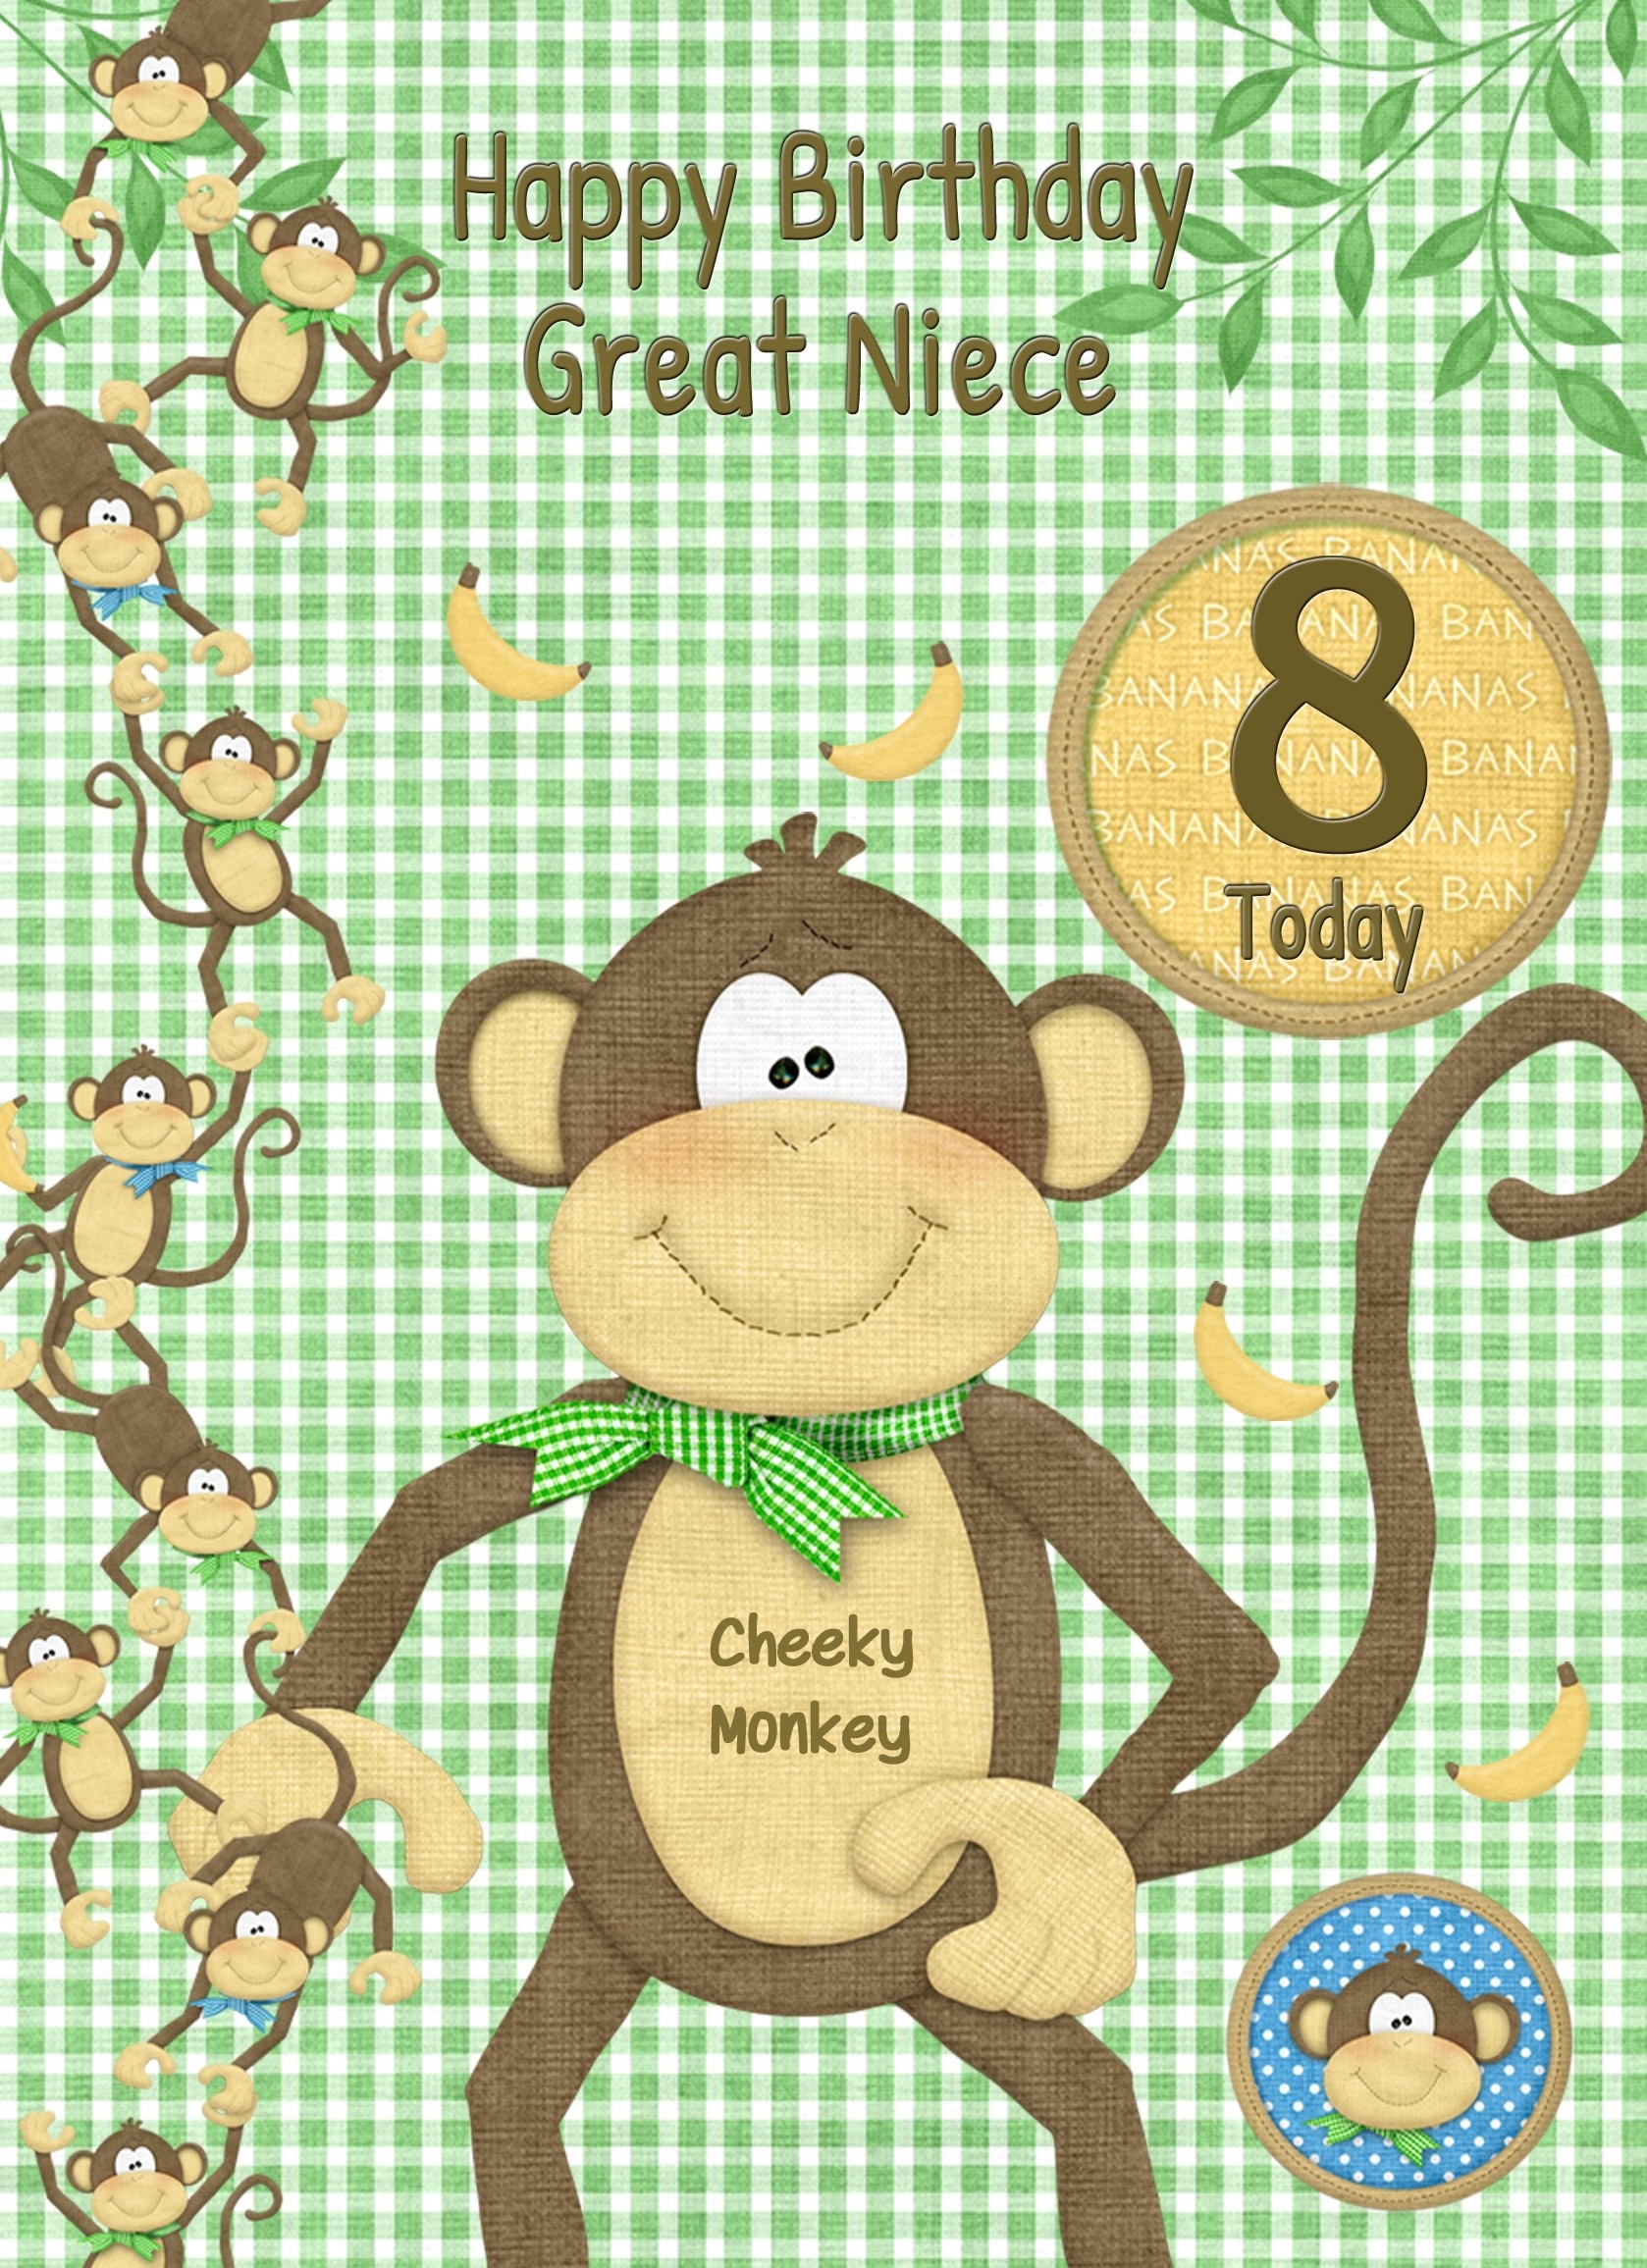 Kids 8th Birthday Cheeky Monkey Cartoon Card for Great Niece